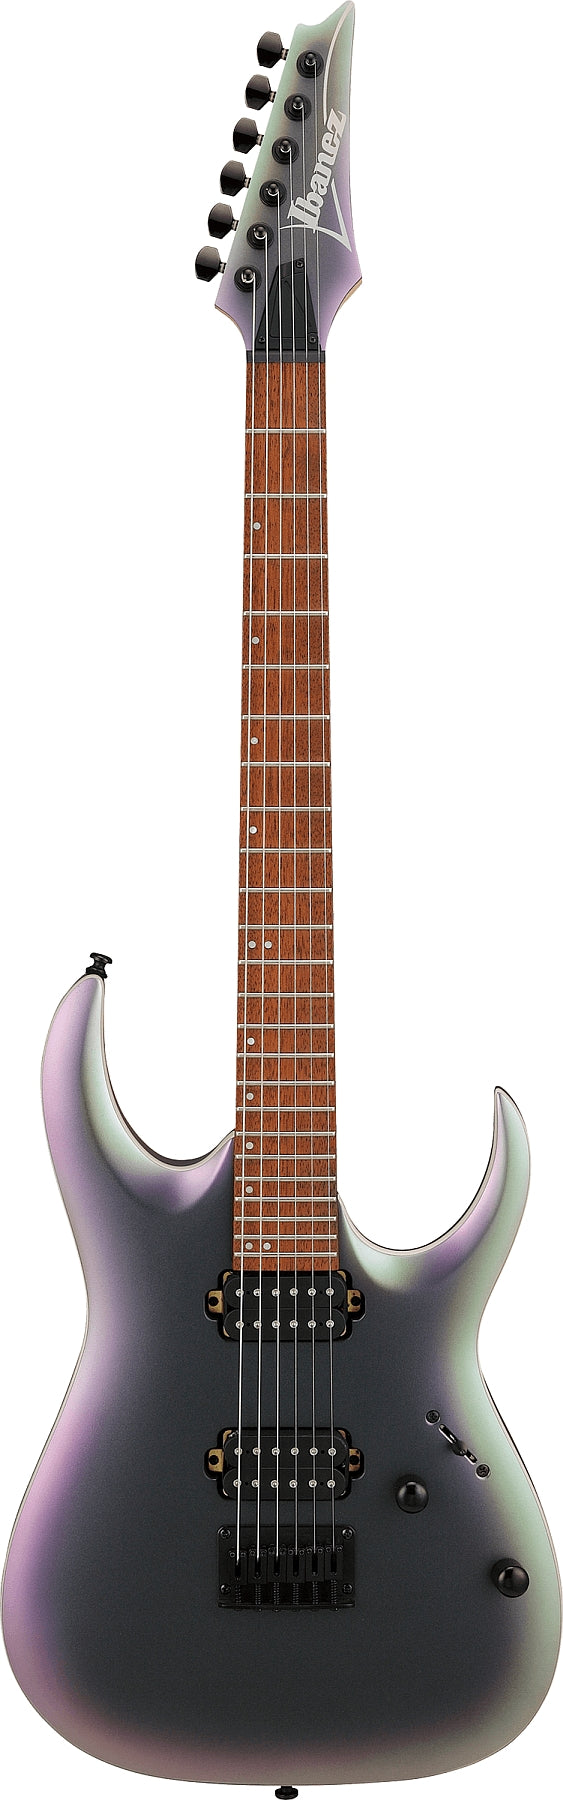 Ibanez Standard RGA42EX Electric Guitar in Black Aurora Burst Matte